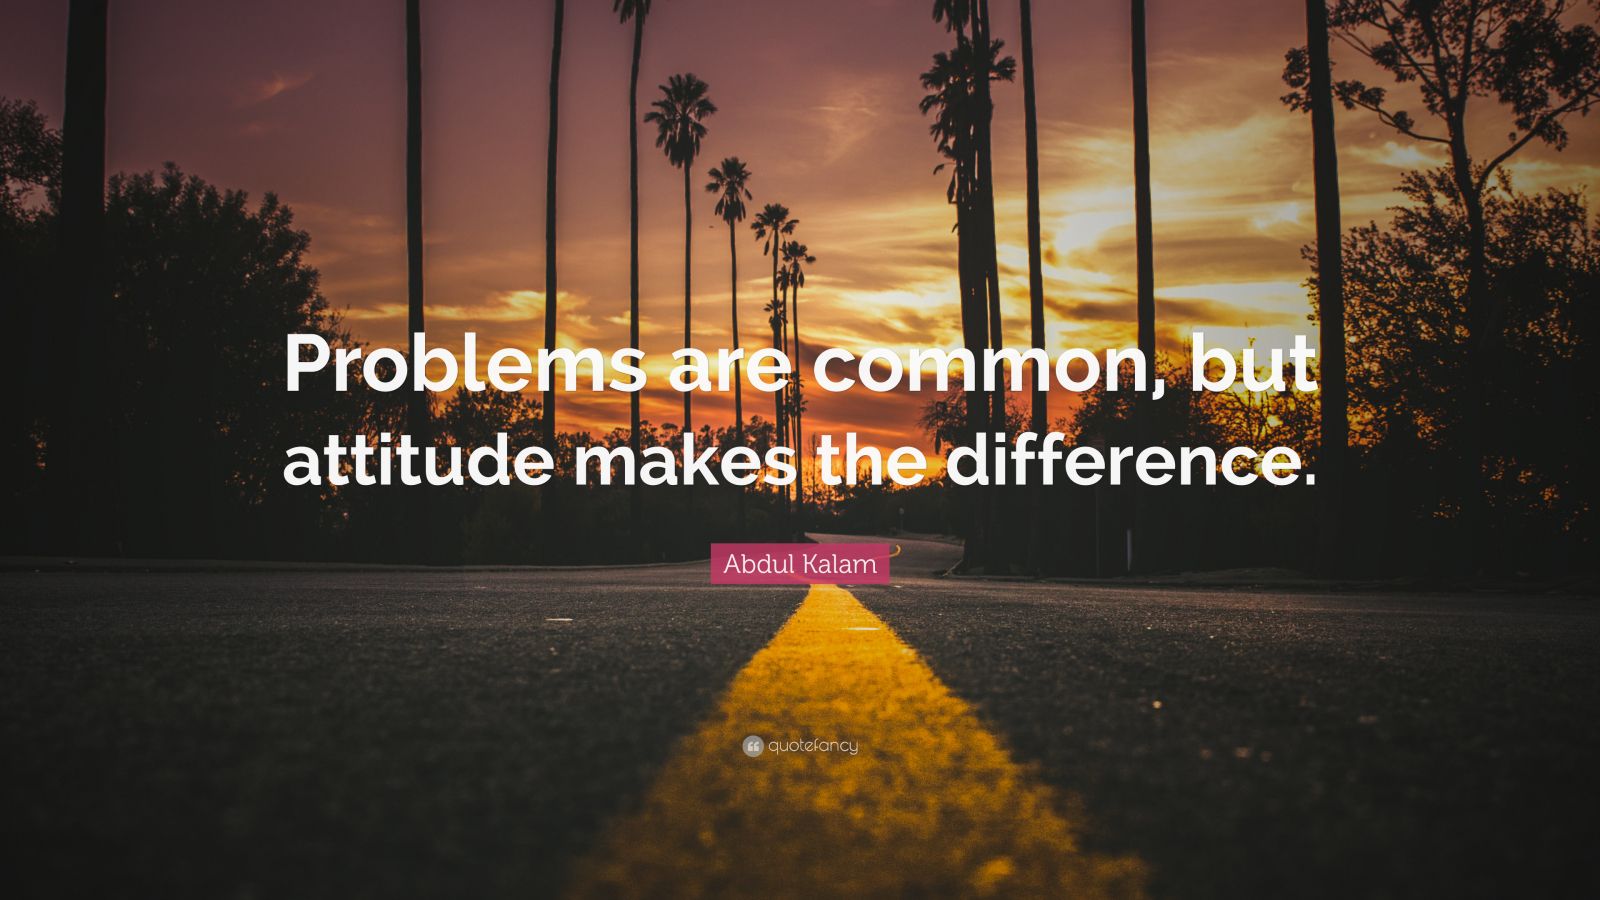 Abdul Kalam Quote: “Problems are common, but attitude makes the ...